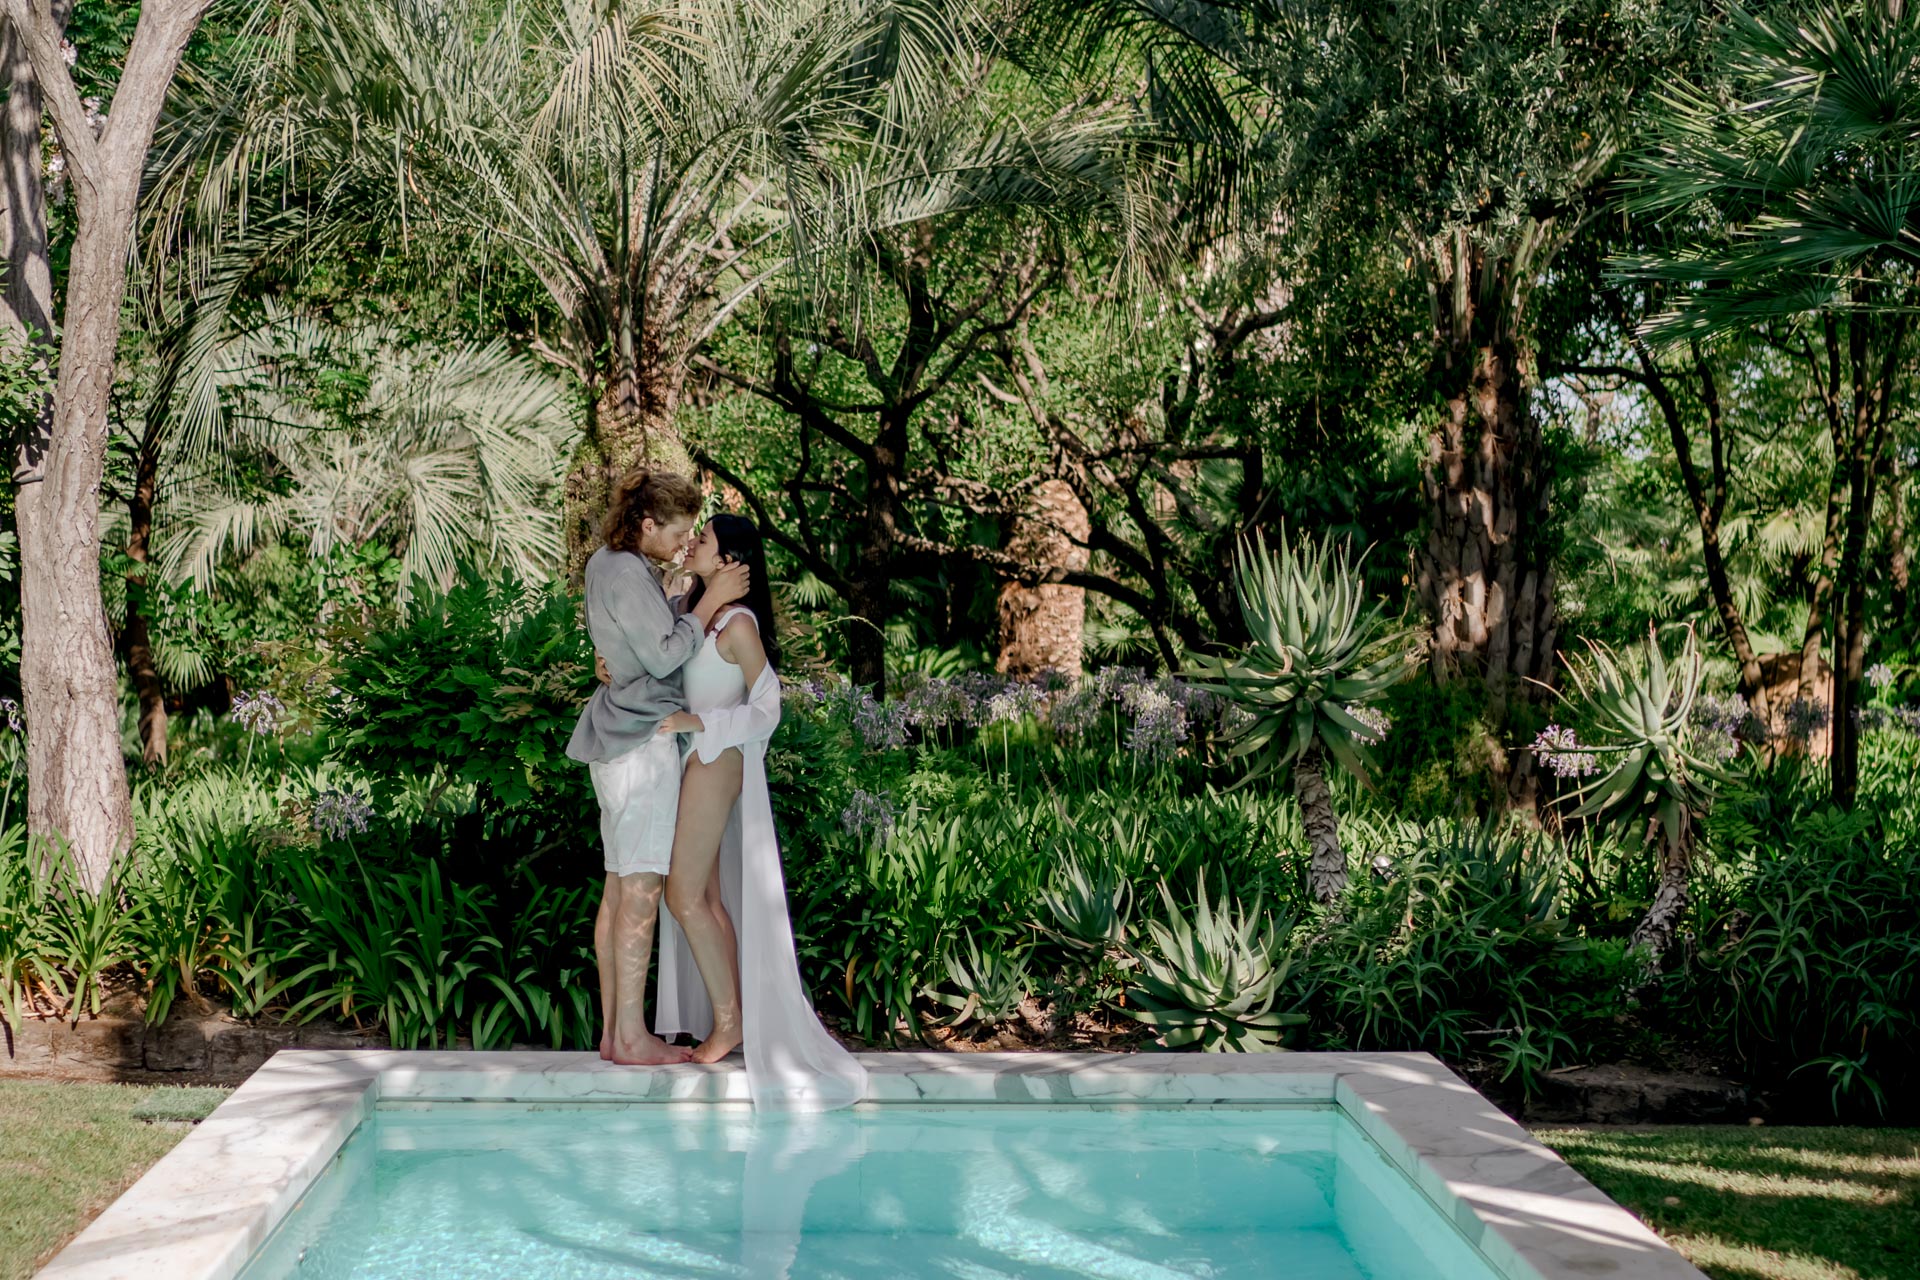 villa astor italian wedding venue amalfi coast top destination weddings elopement in italy pool